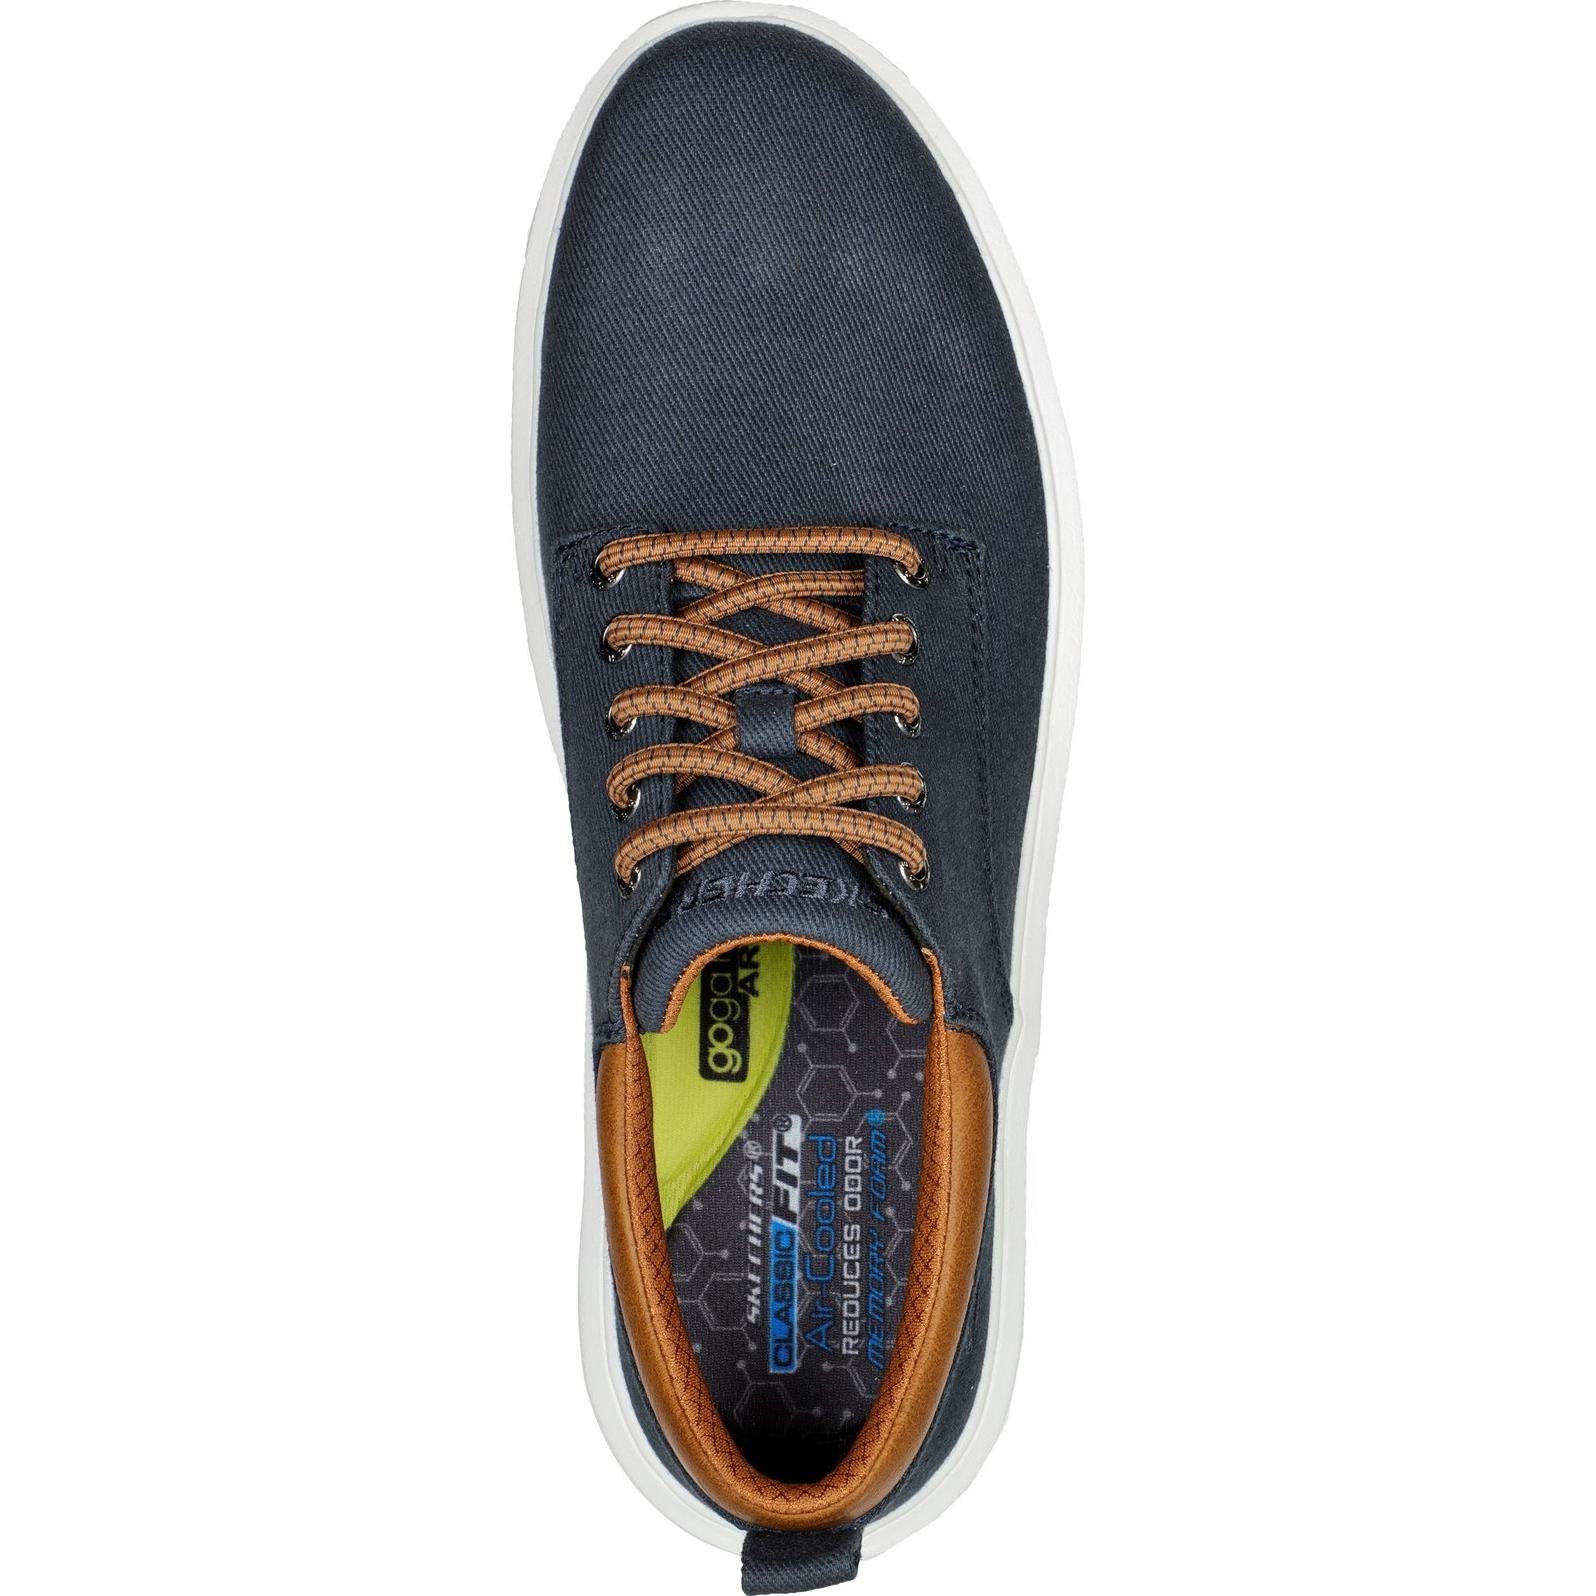 Skechers Viewson - Doriano Shoe